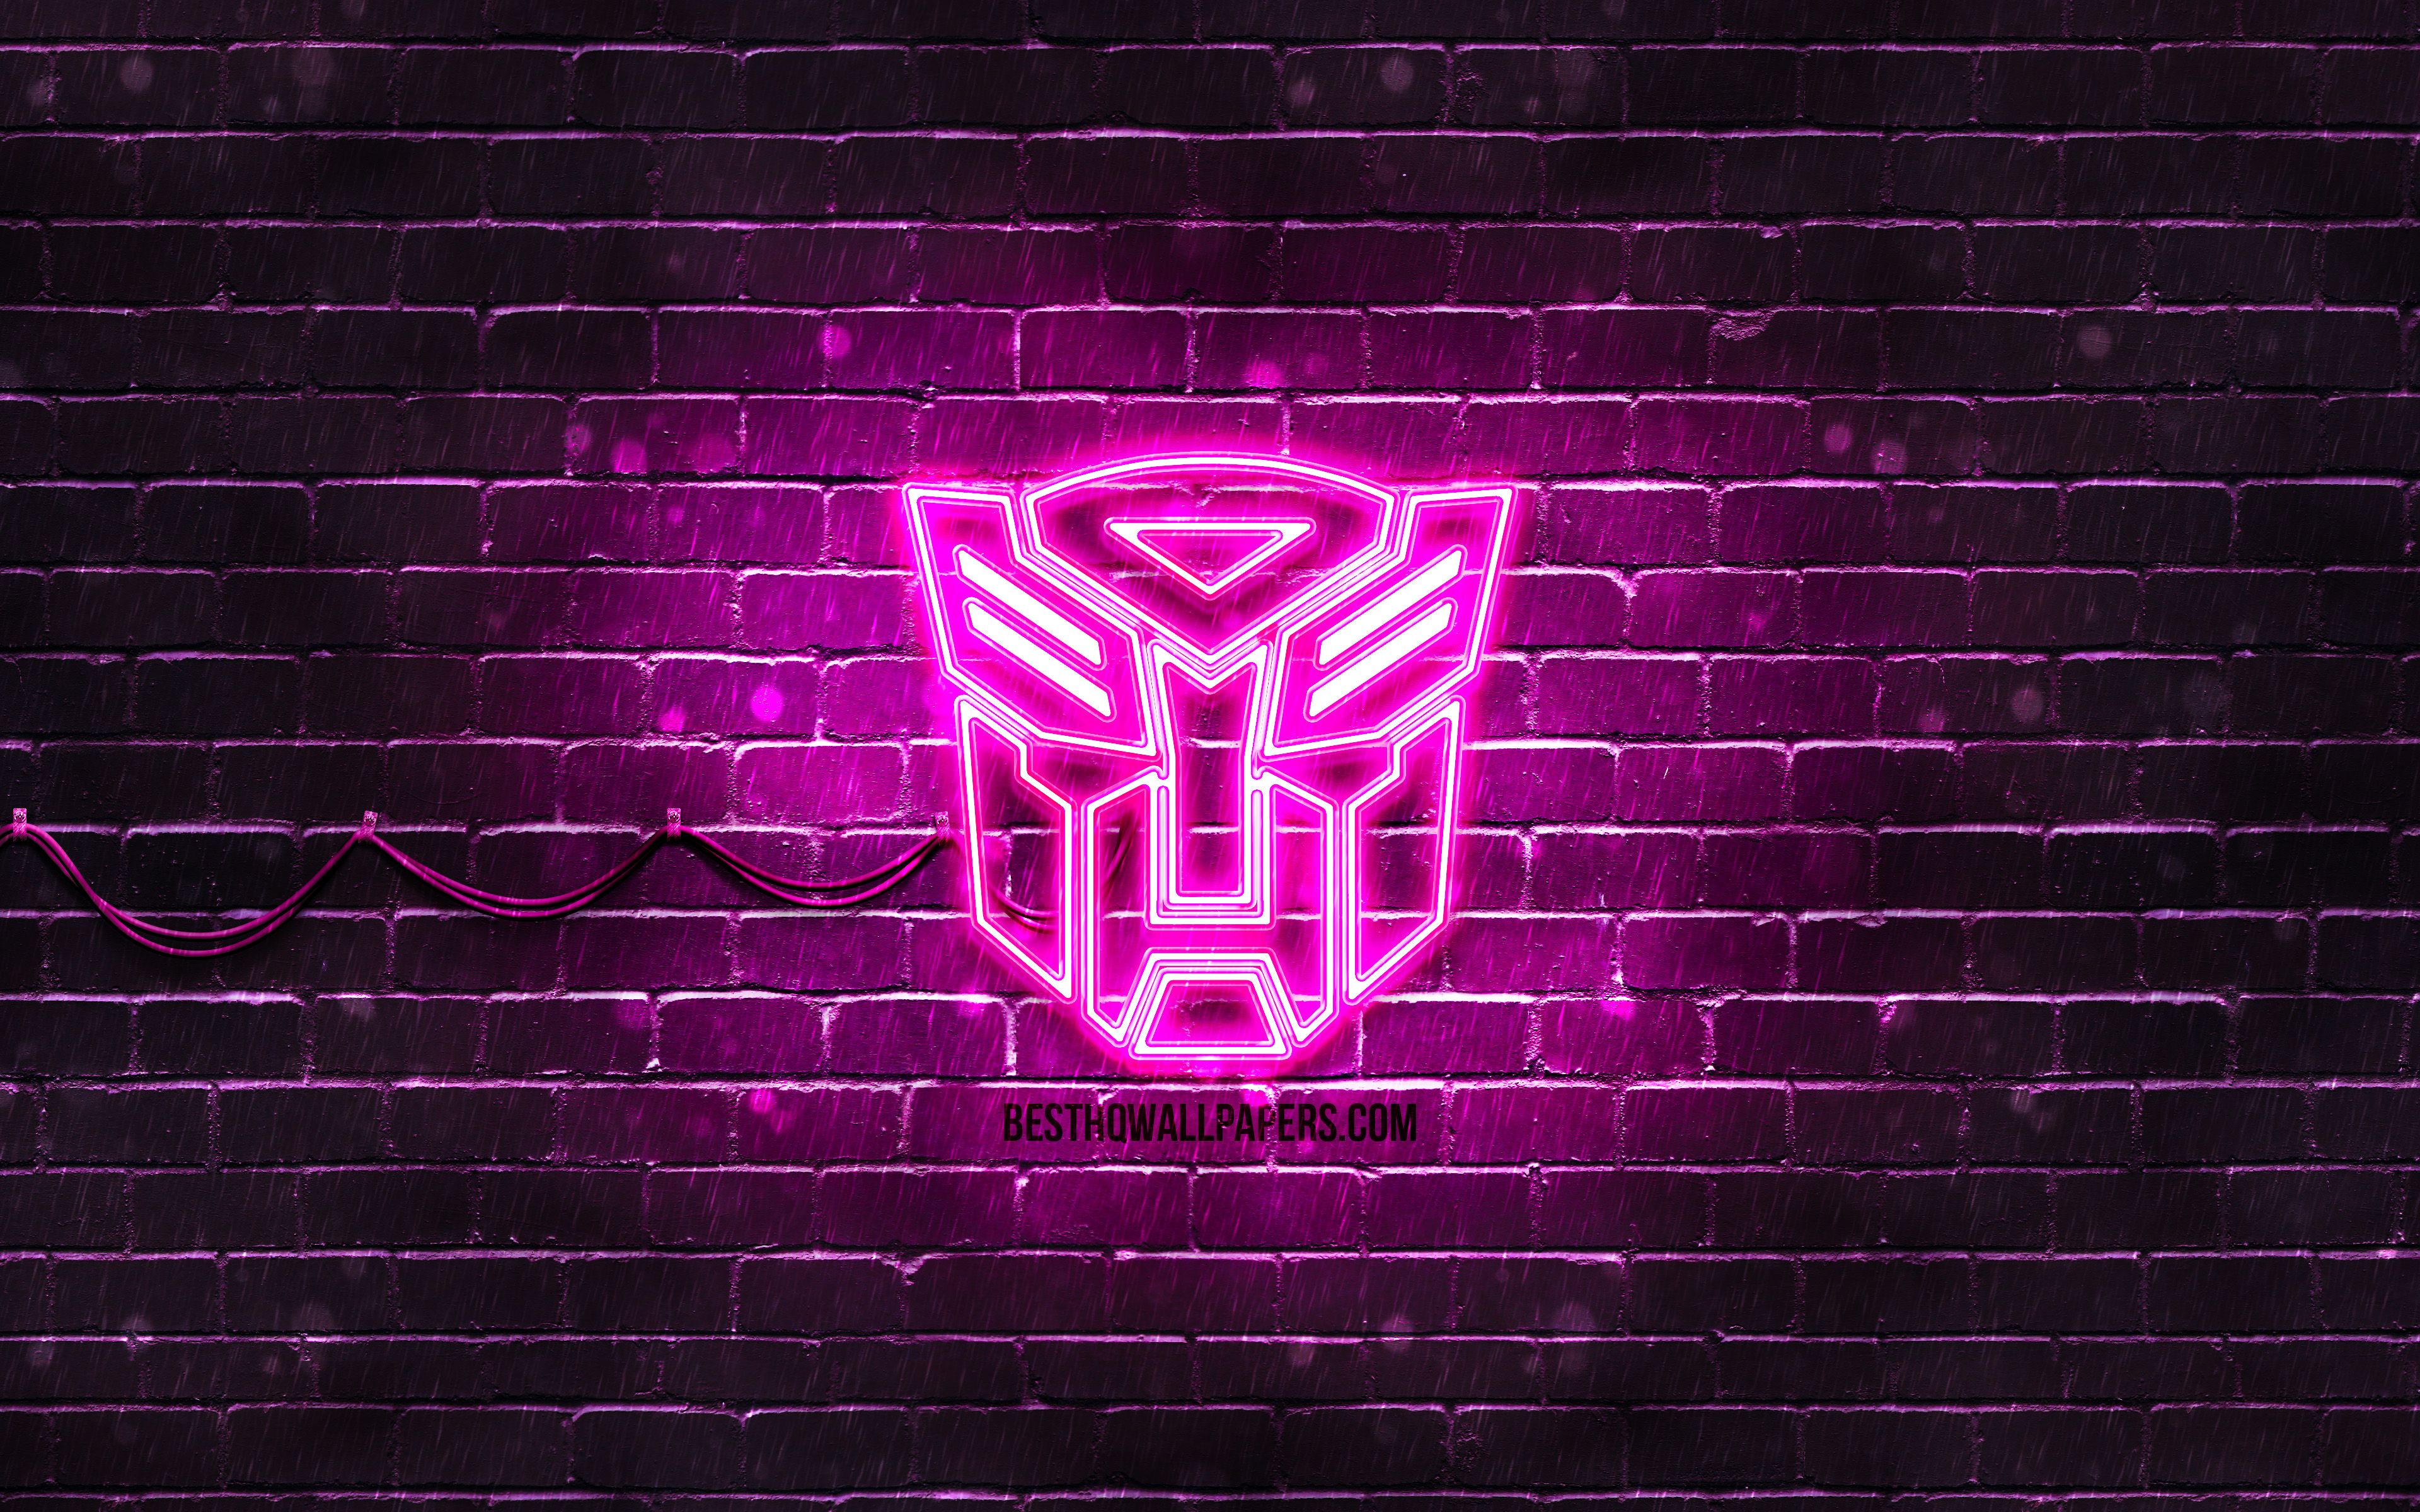 Download wallpaper Transformers purple logo, 4k, purple brickwall, Transformers logo, movies, Transformers neon logo, Transformers for desktop with resolution 3840x2400. High Quality HD picture wallpaper